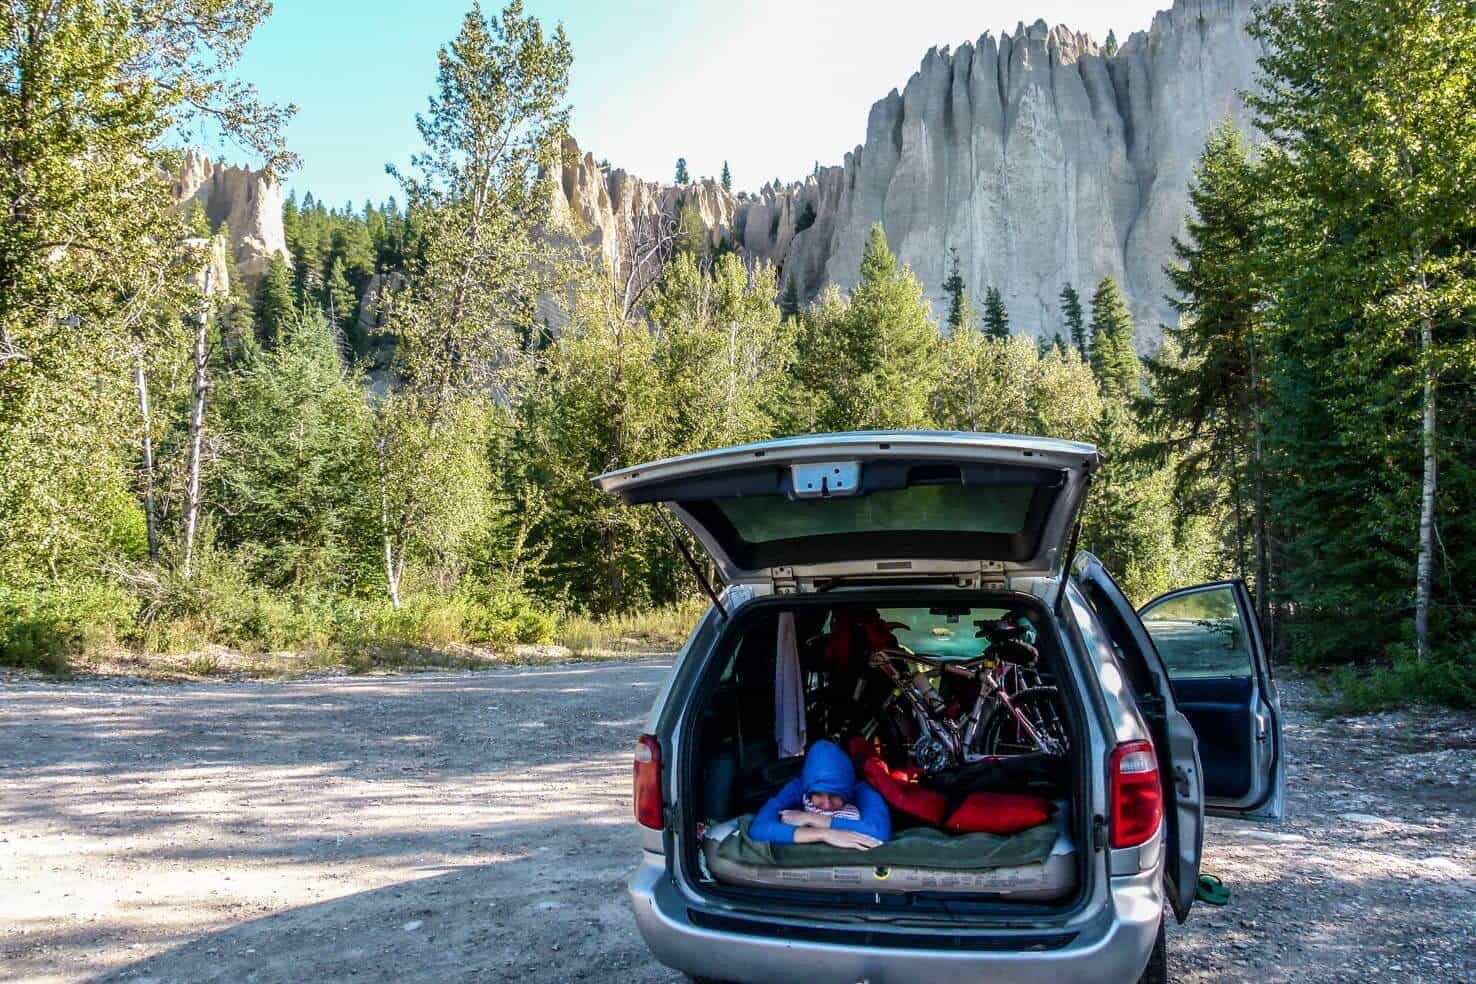 Chrysler Grand Voyager/Dodge Grand Caravan minivan camper conversion